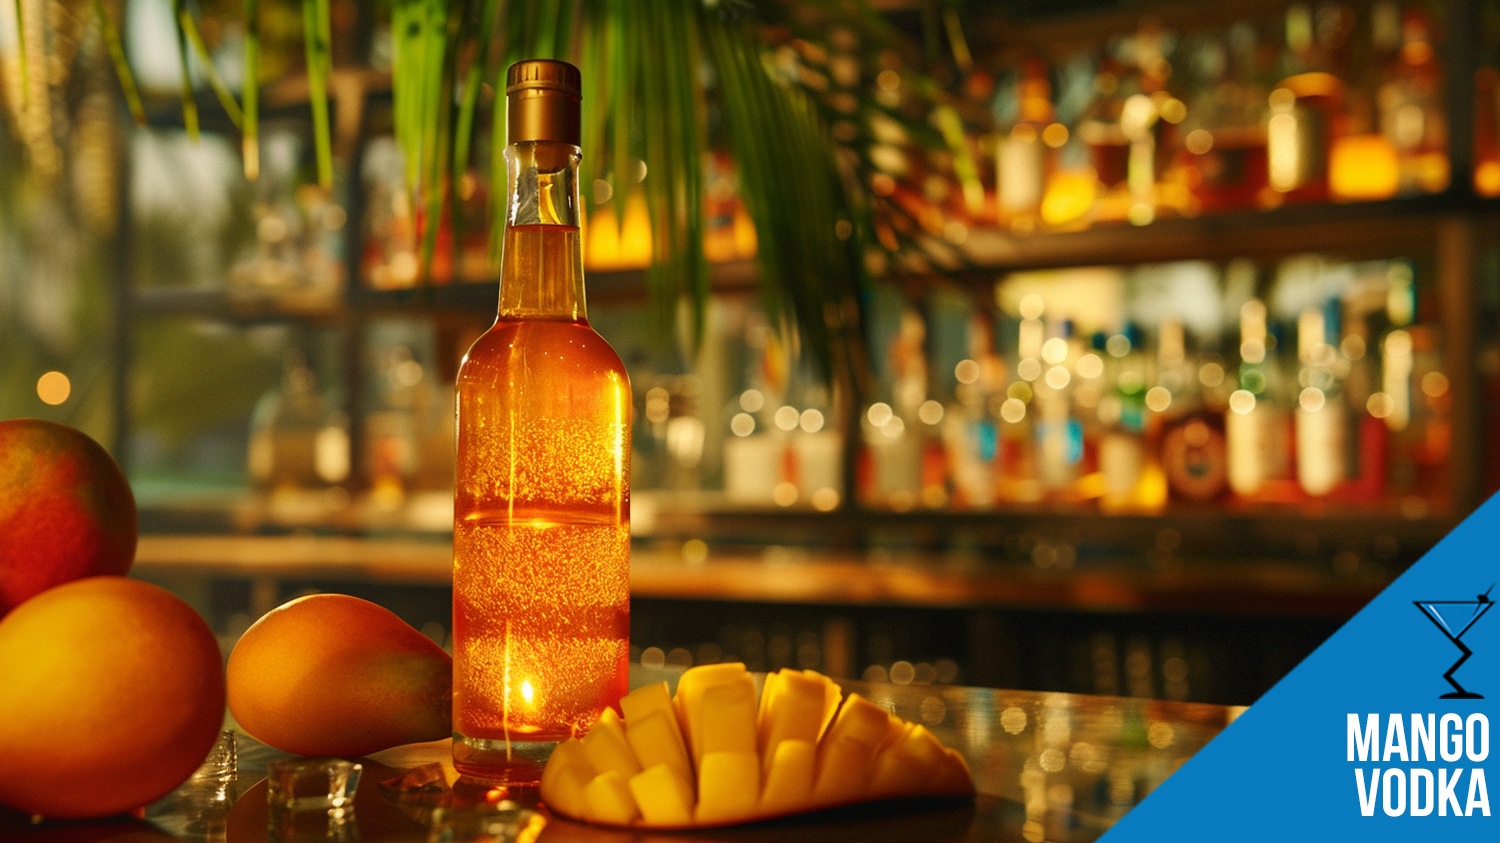 Tropical Mango Vodka Cocktails: Best Recipes and Top Brands